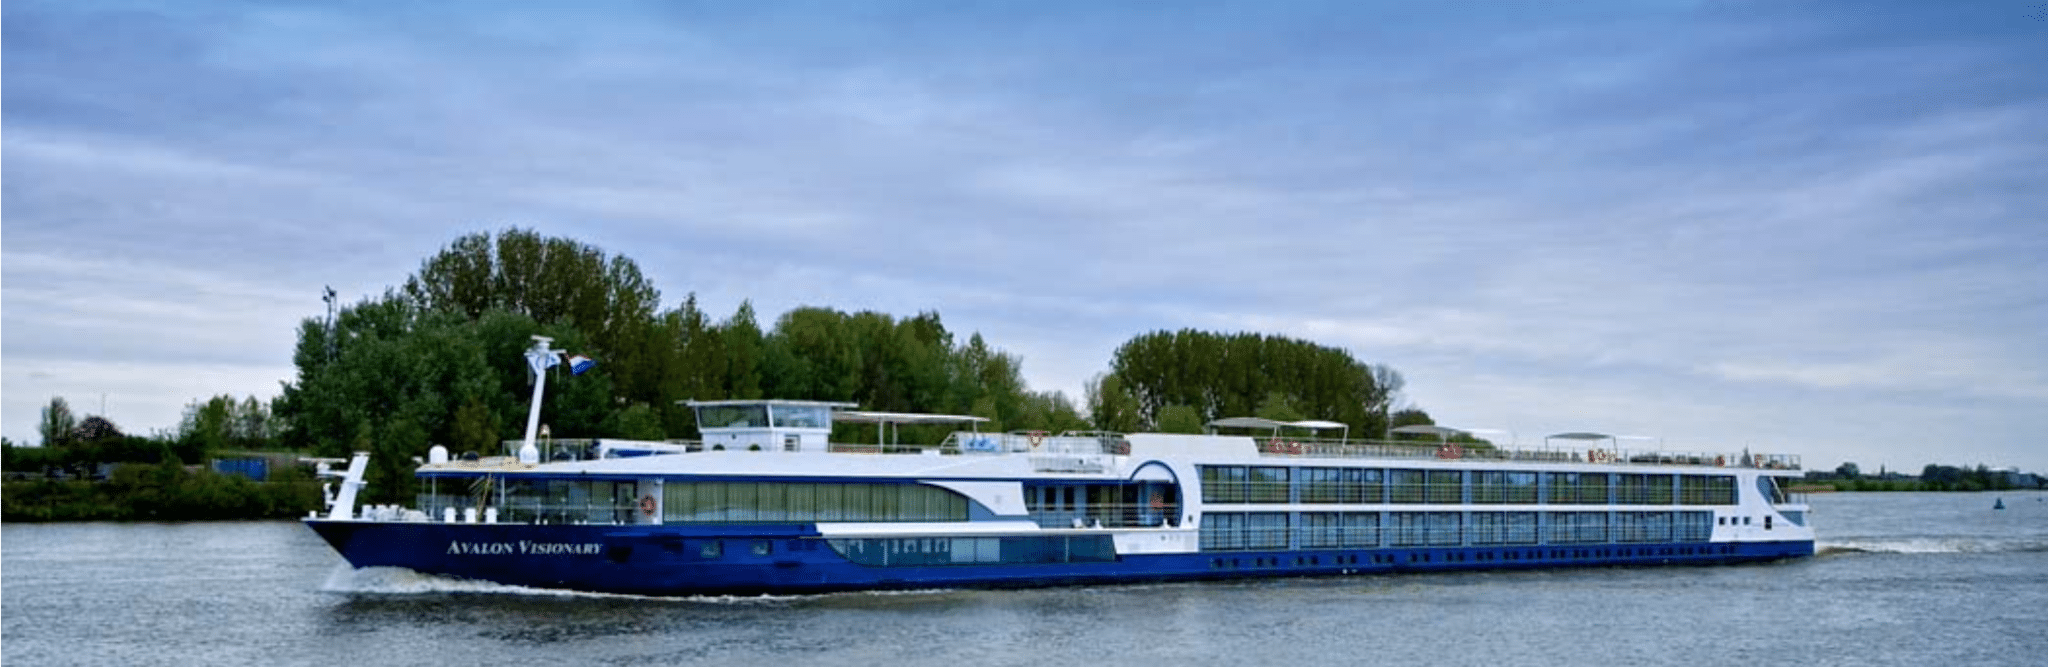 avalon river boat cruises